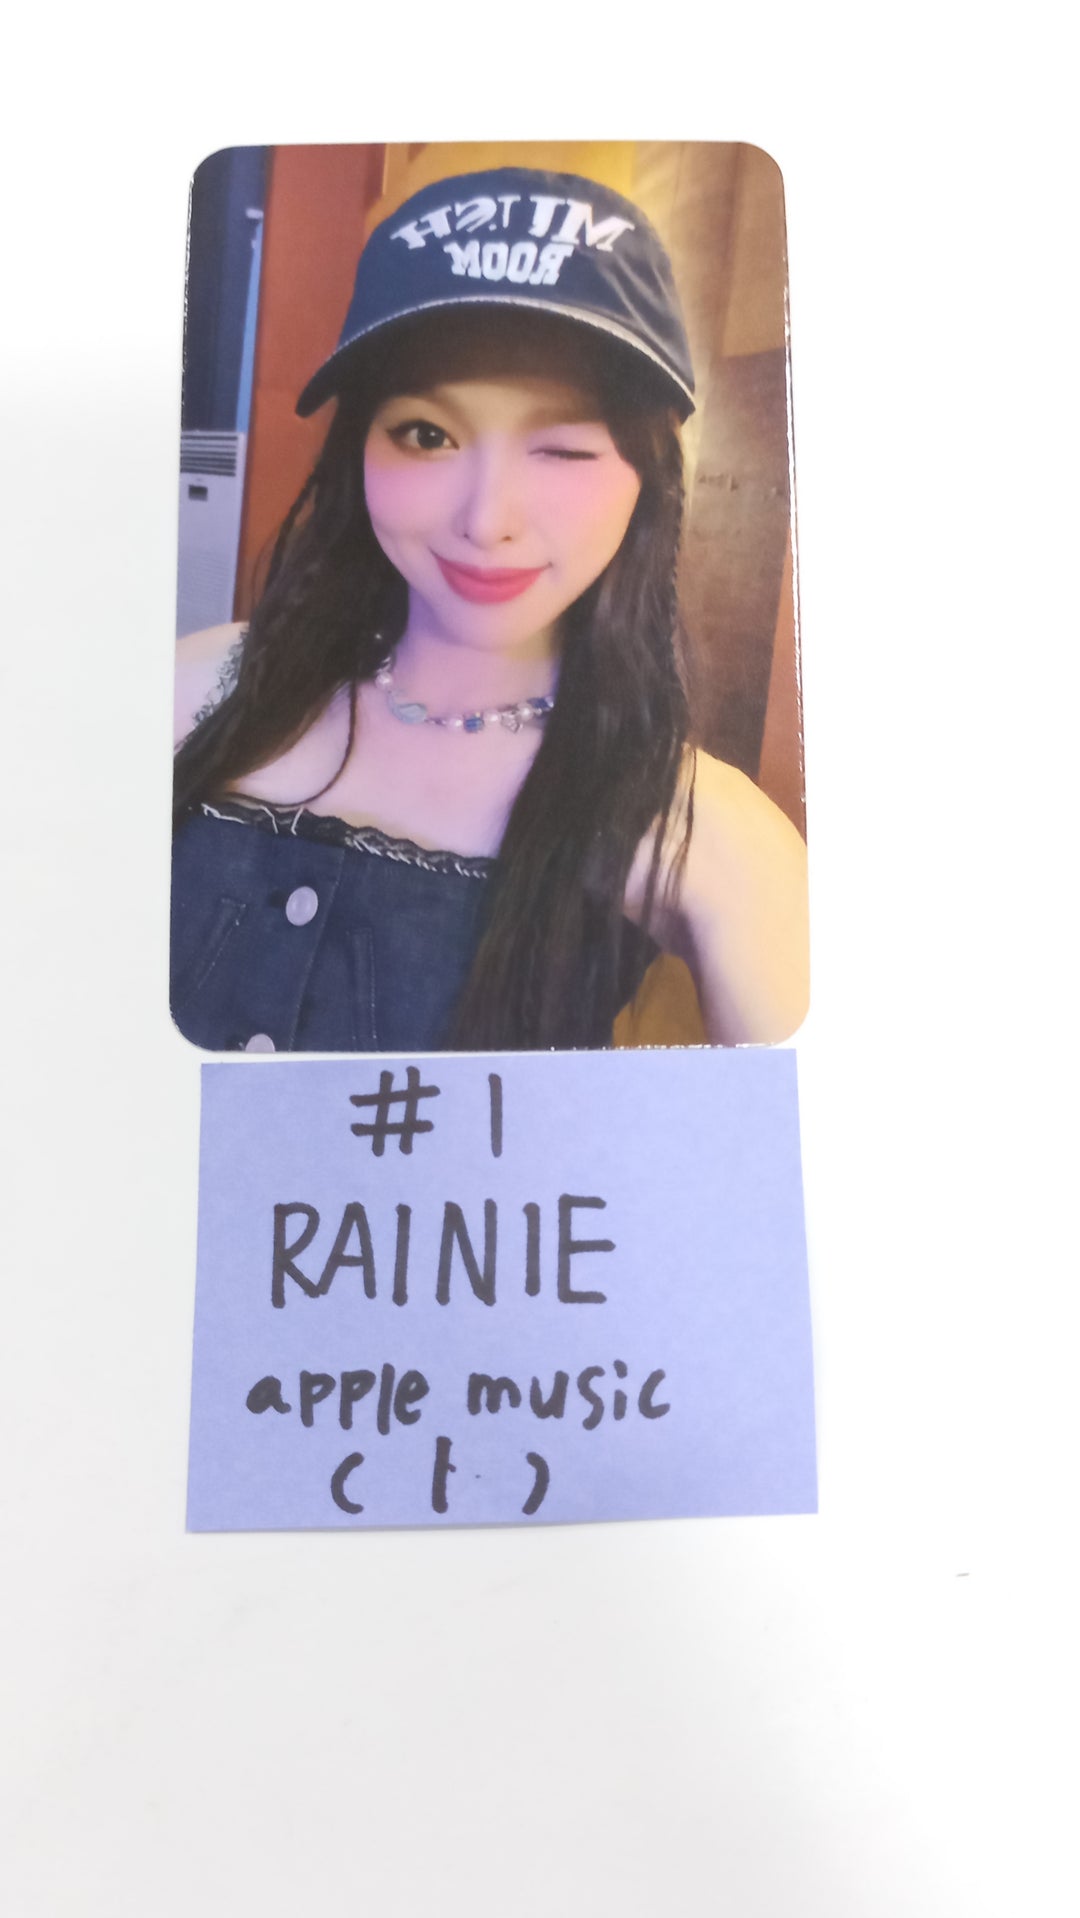 PRIMROSE "LAFFY TAFFY" - Apple Music Fansign Event Photocard [23.09.14]